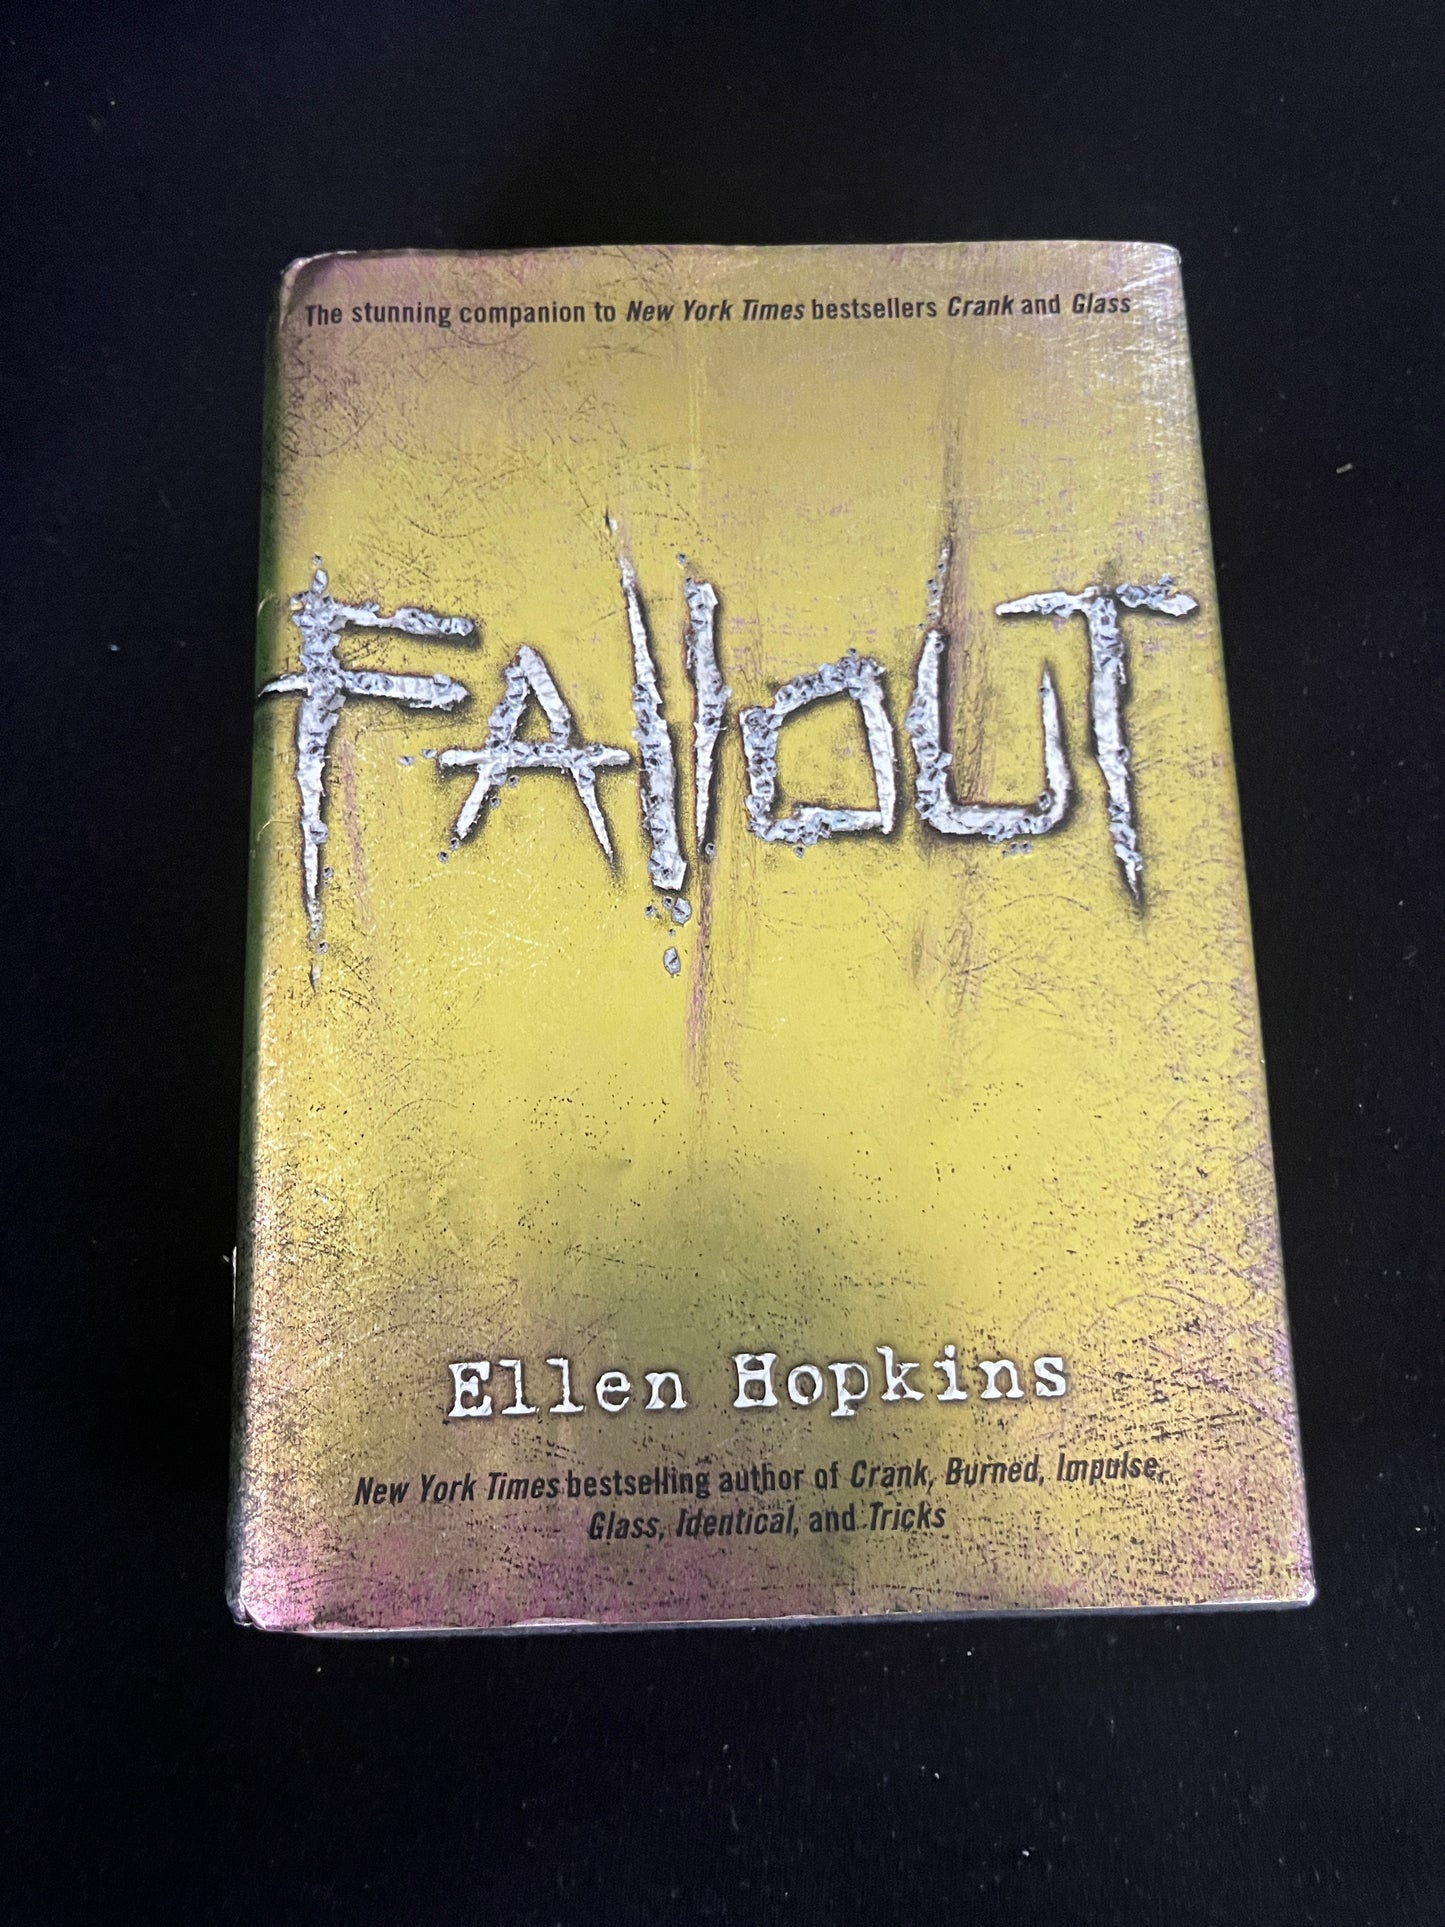 FALLOUT by Ellen Hopkins